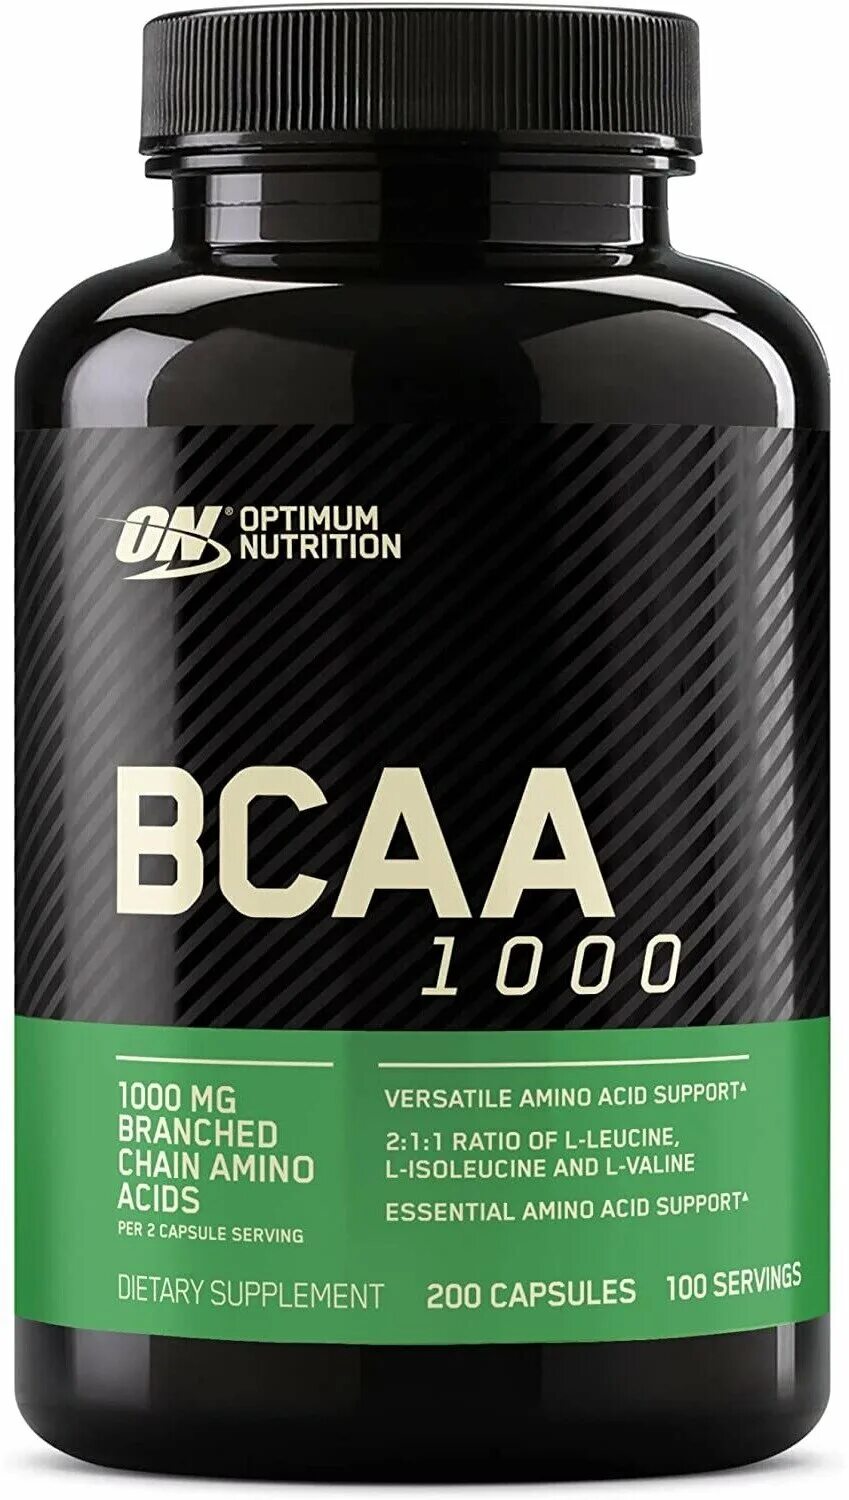 Аминокислоты всаа купить. On BCAA 1000 200 капсул. Optimum BCAA 200 1000. Ампула BCAA 1000. ВСАА аминокислоты.